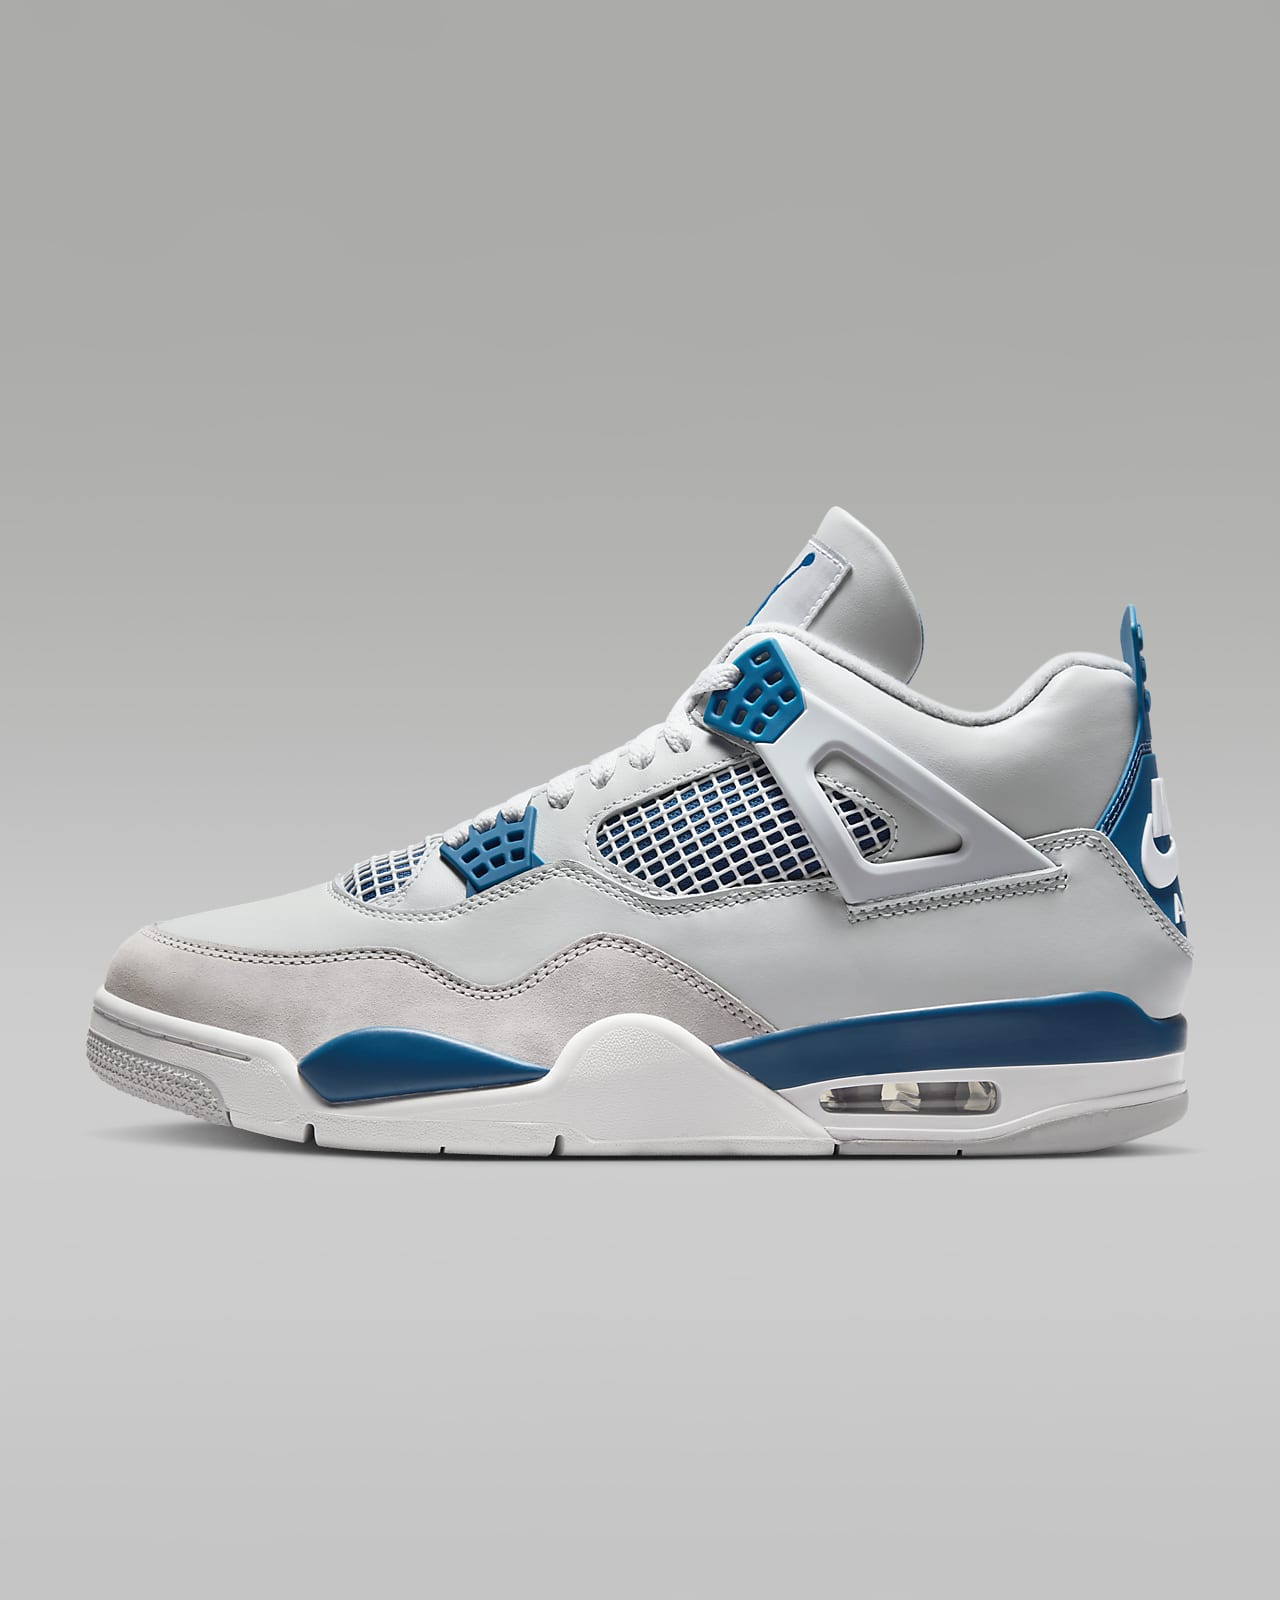 Air Jordan 4 Retro "Industrial Blue" Men's Shoes